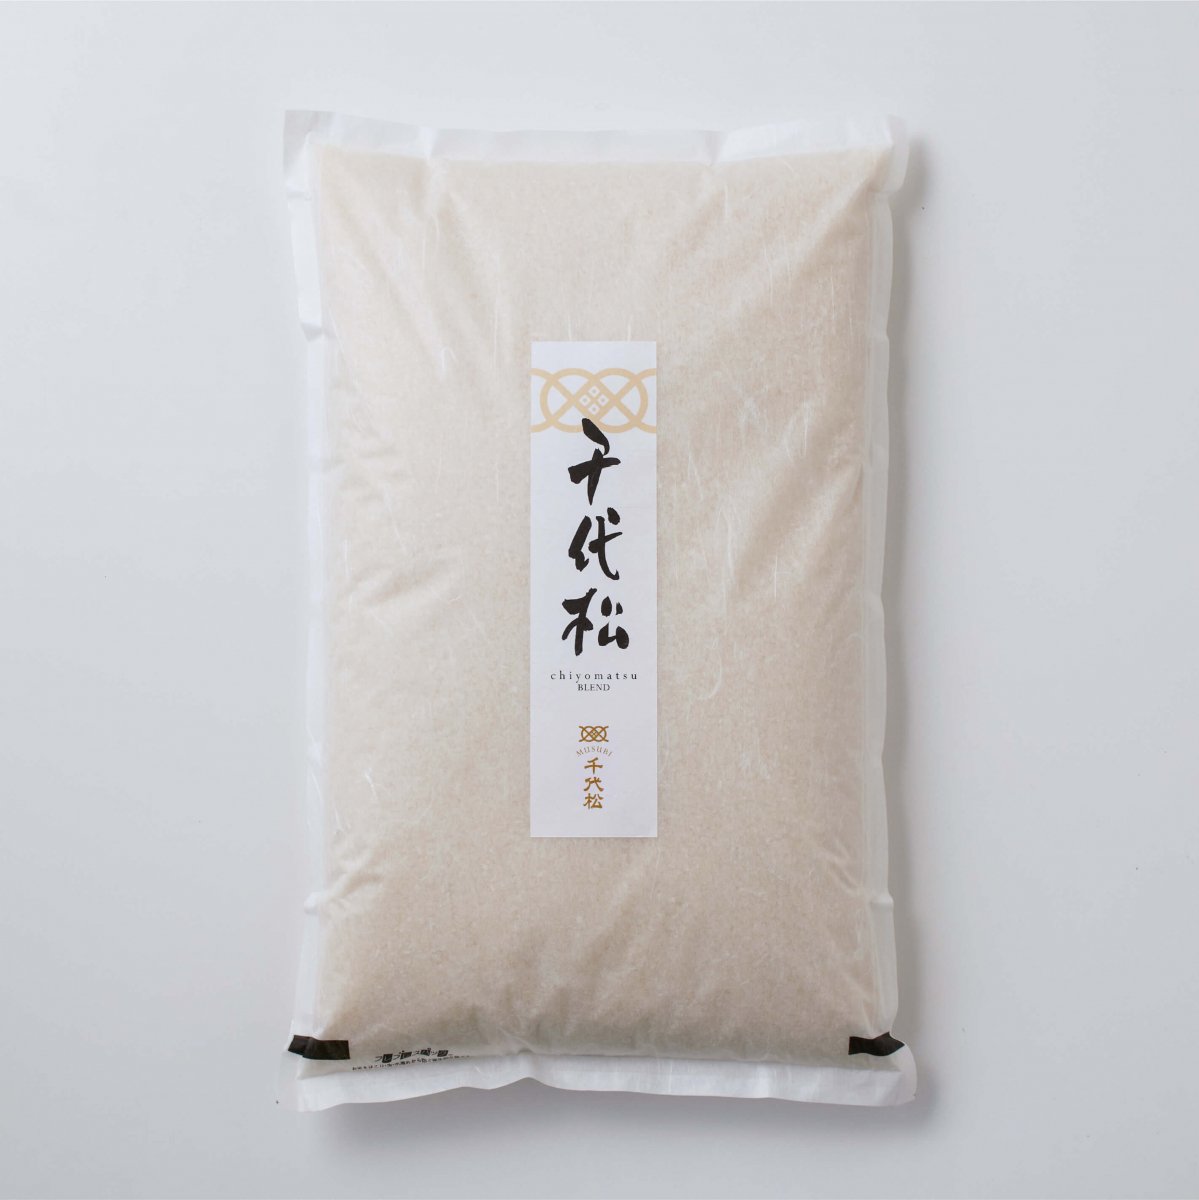 <p>千代松<br>オリジナルブレンド米<br><span class="rice-small">(ご自宅用 5kg)</span></p>